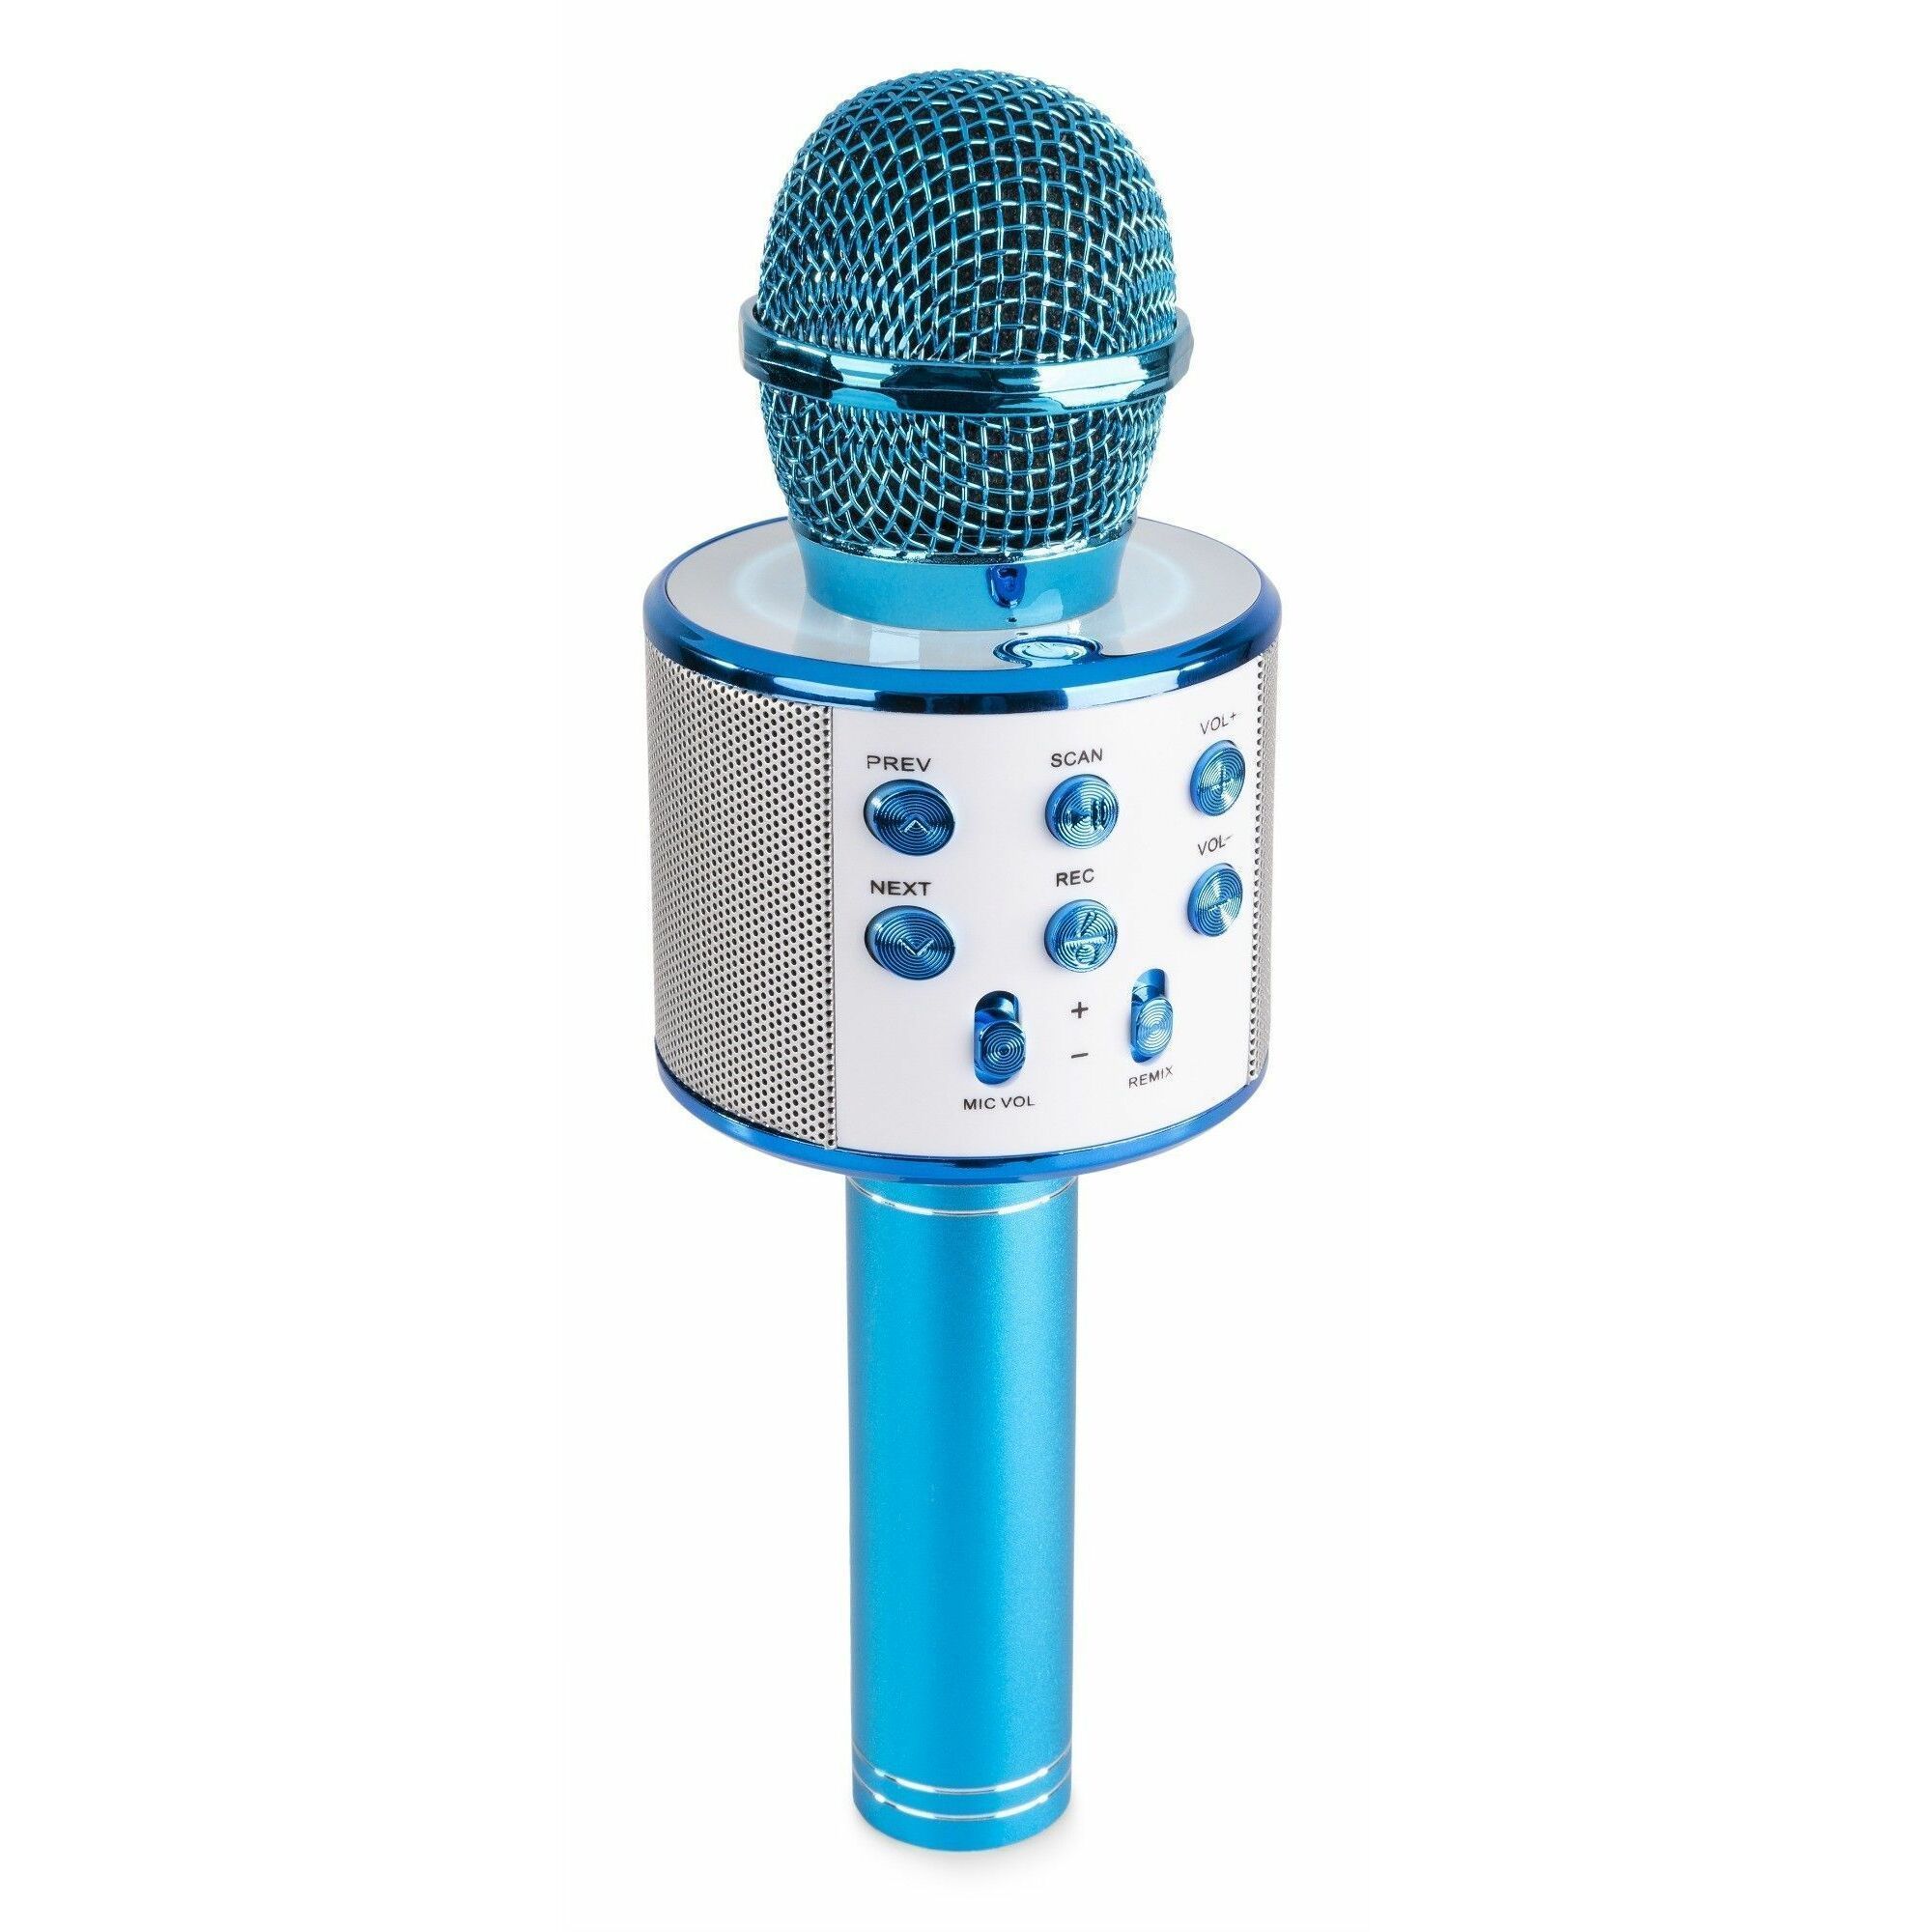 MAX KM01 microfoon speaker, Bluetooth & mp3 - Blauw kopen?